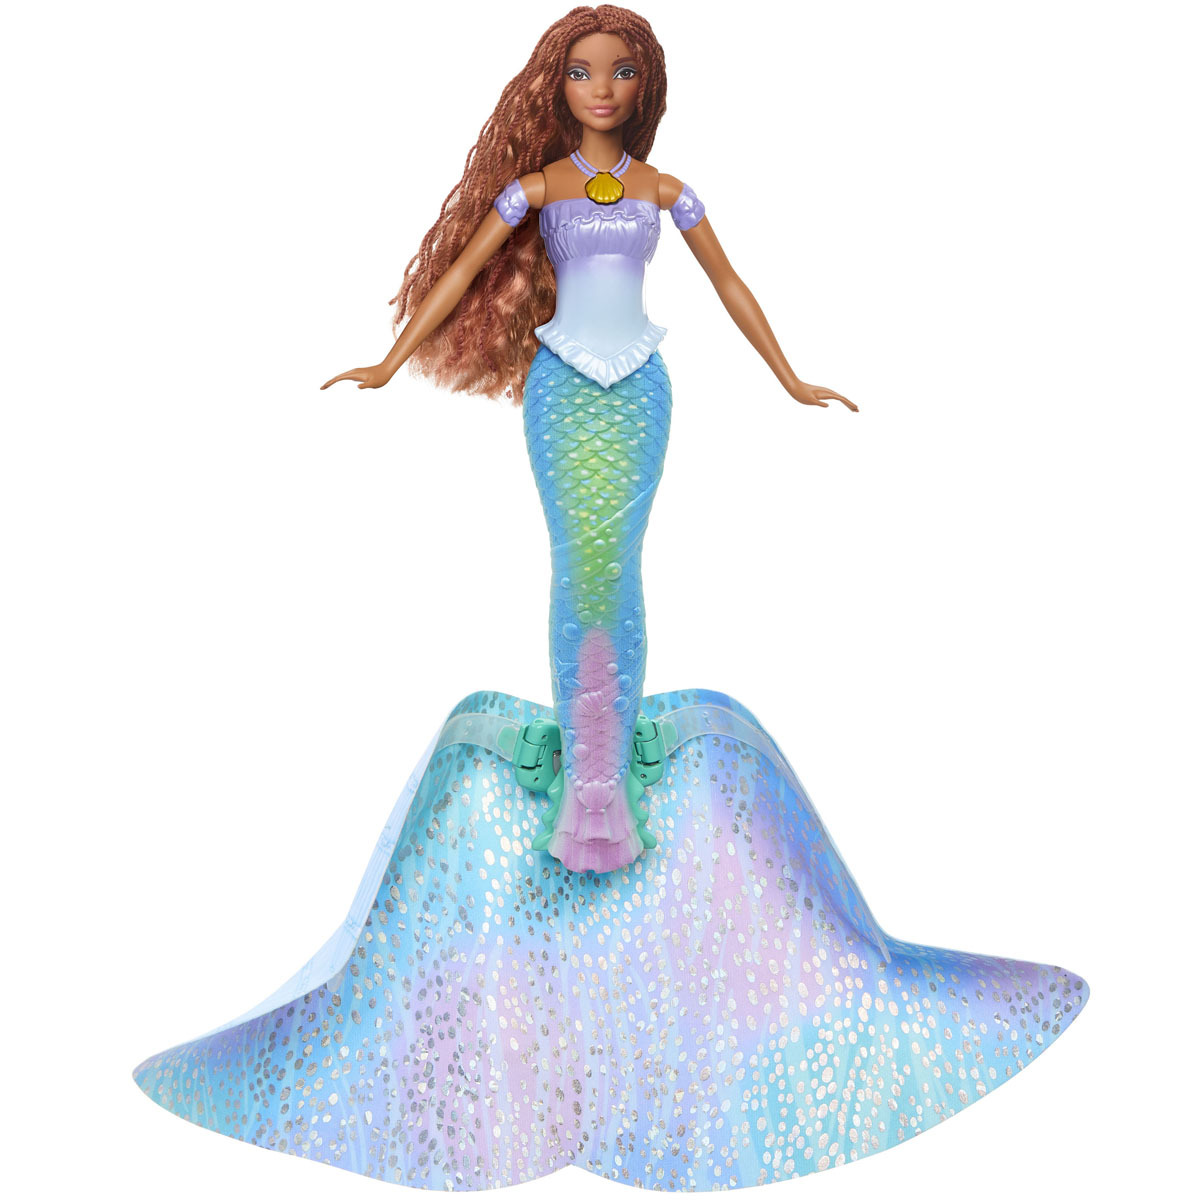 Disney My 1st Princess Ariel Seashell Playset